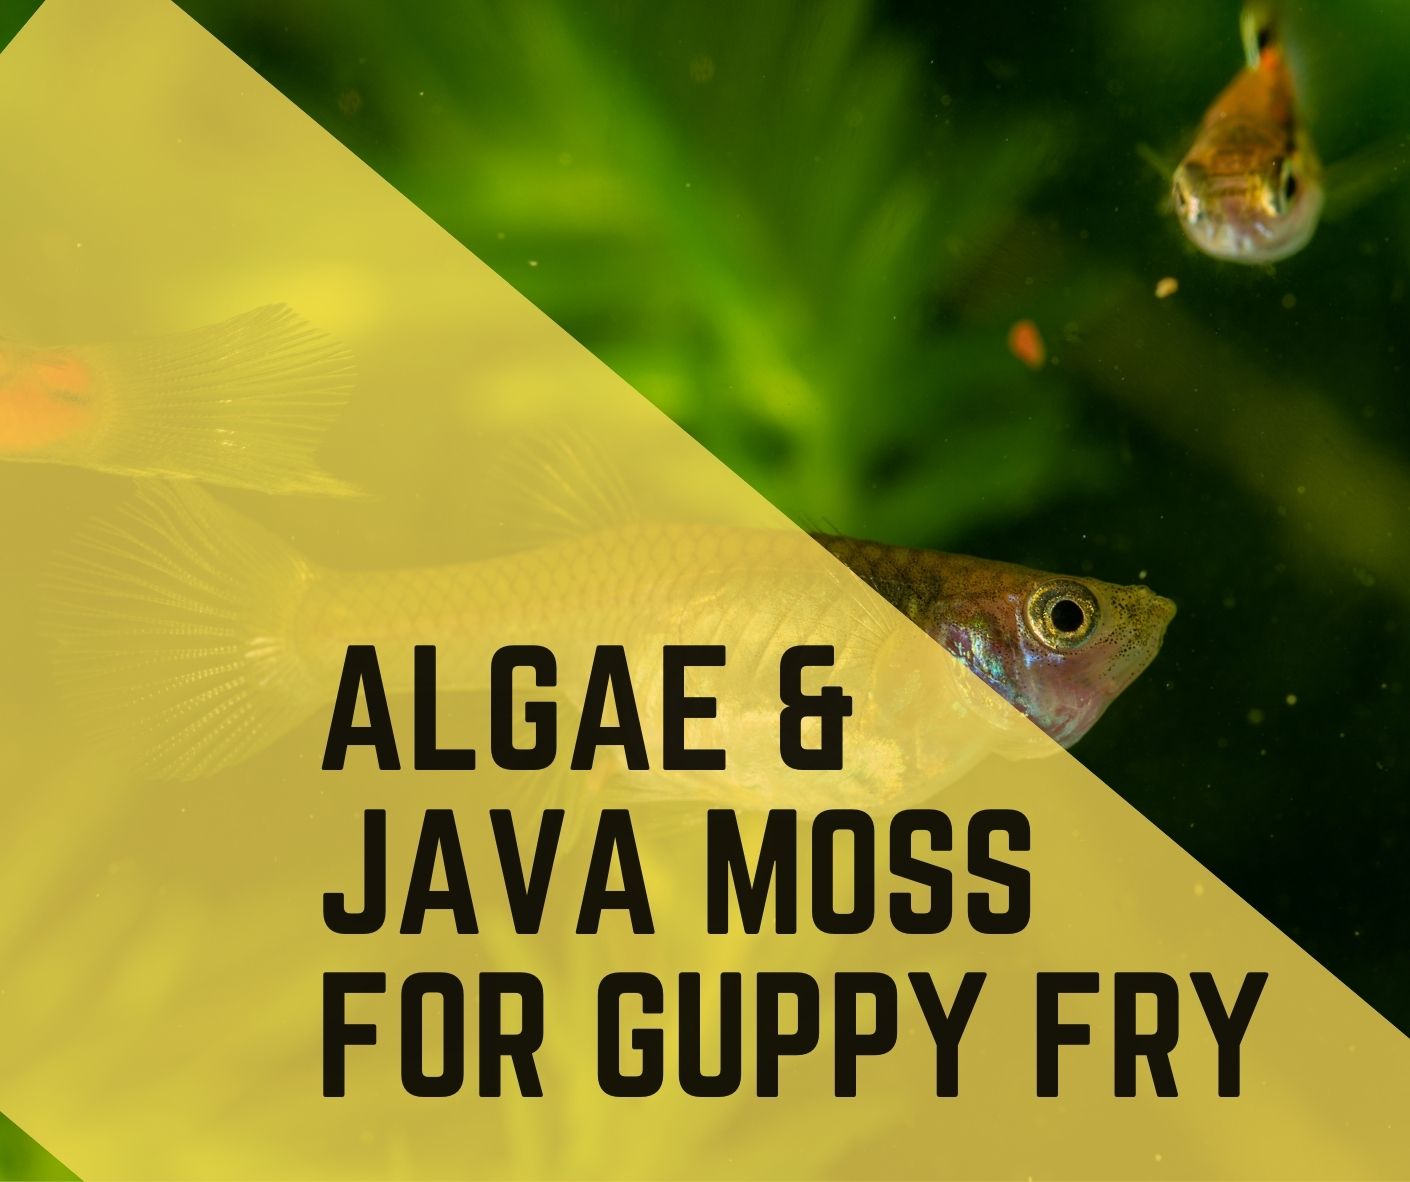 Are algae bad for guppies?